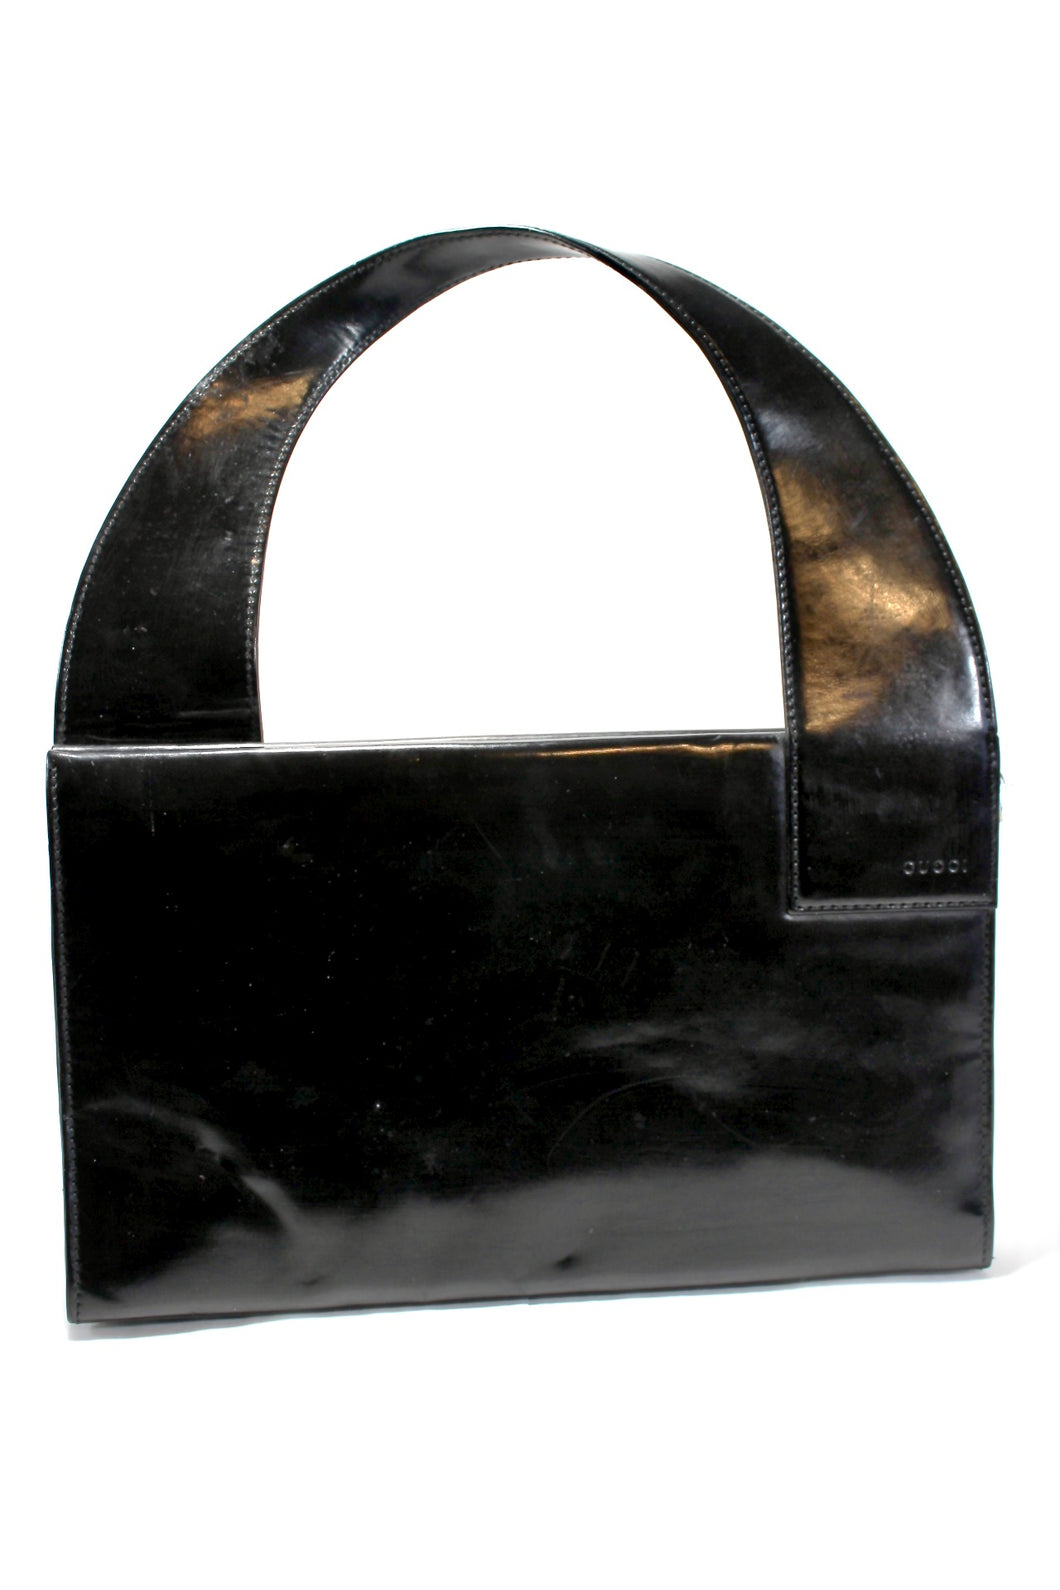 Vintage GUCCI Black Patent Leather Accordian Style Handbag Italy